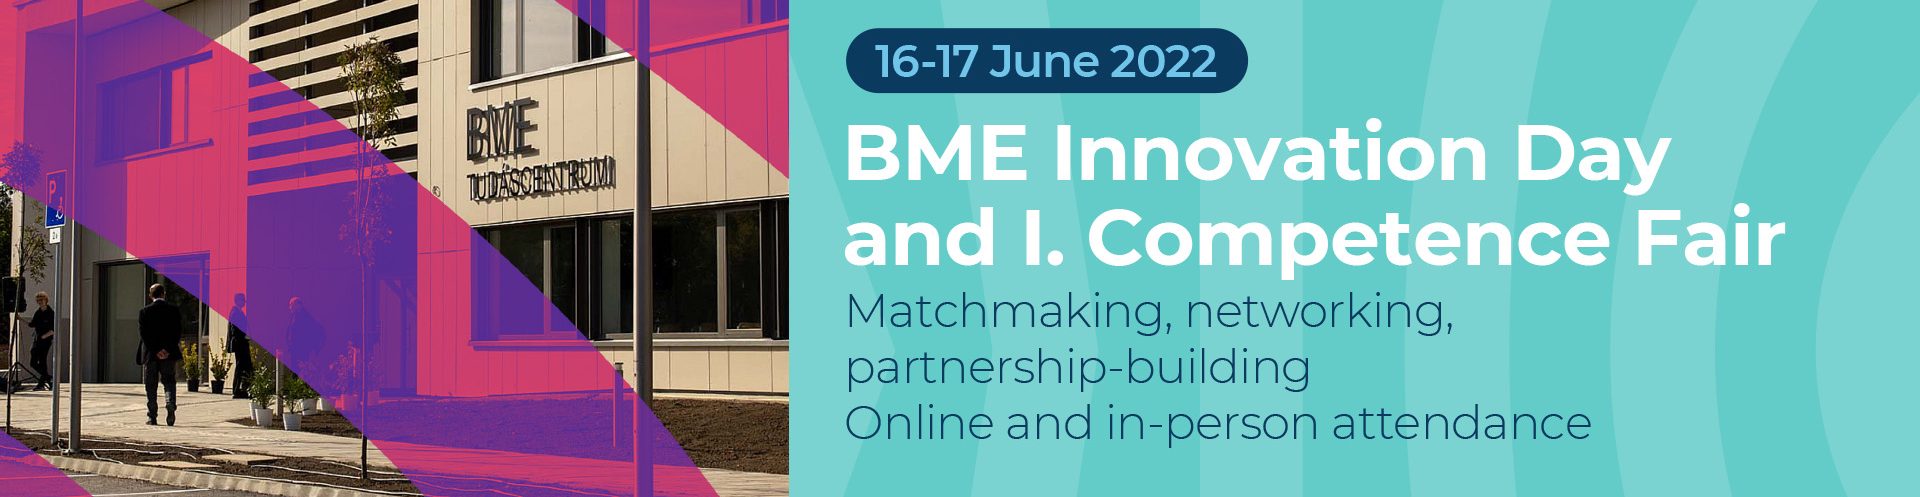 BME Innovation Day junius16 17